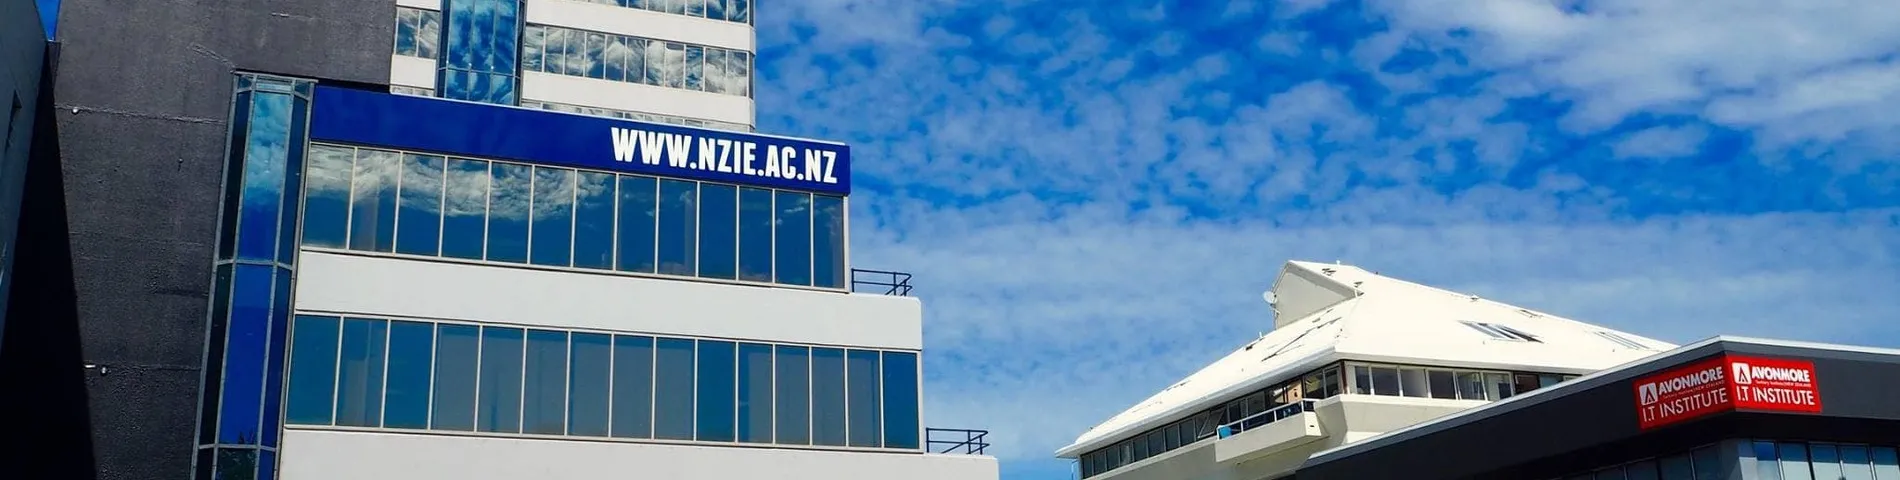 NZIE - New Zealand Institute of Education afbeelding 1